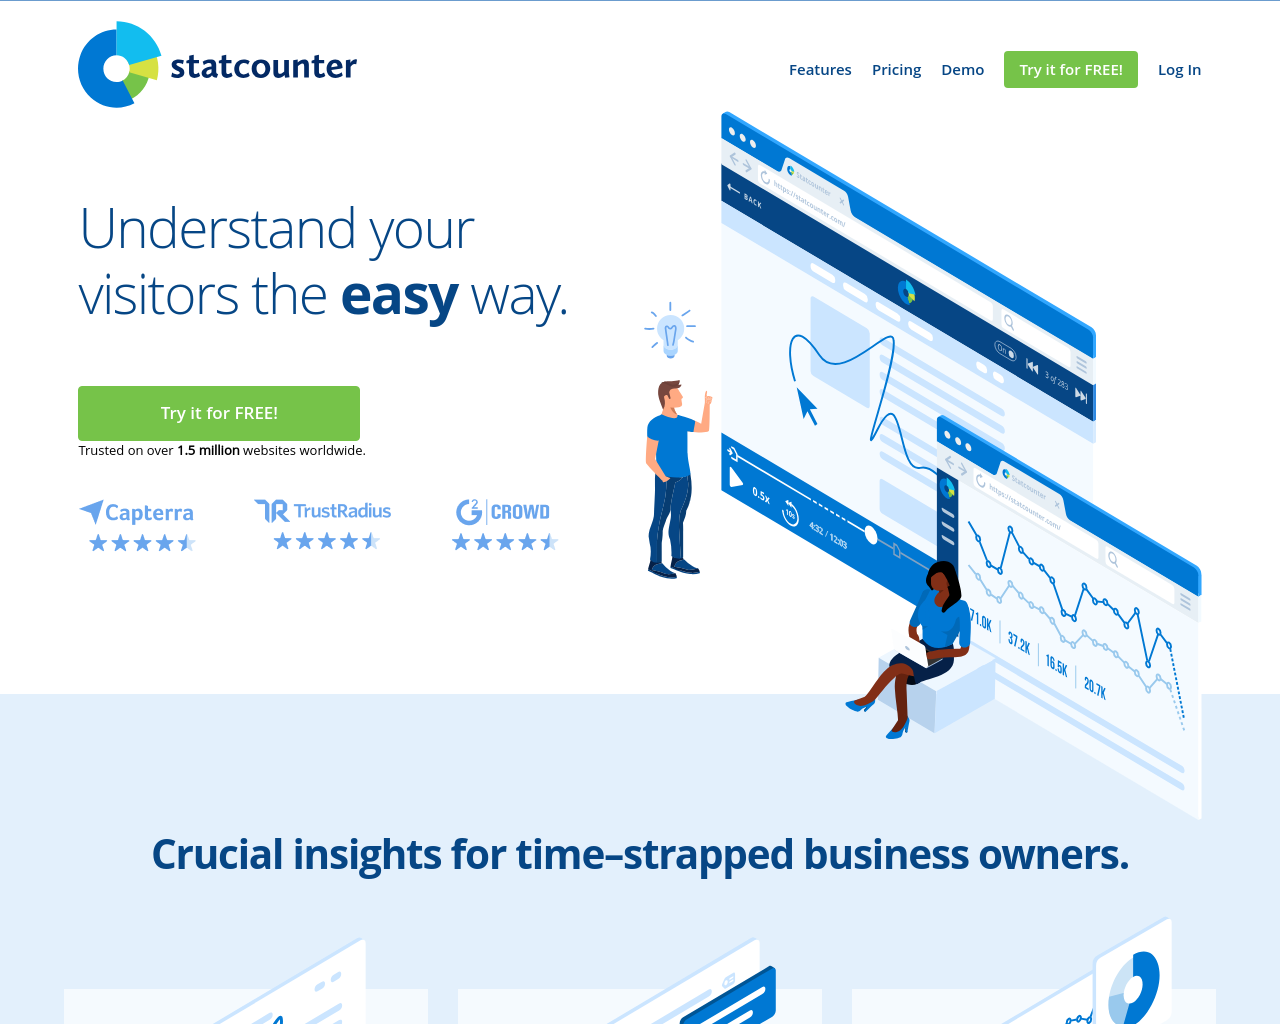 statcounter.com